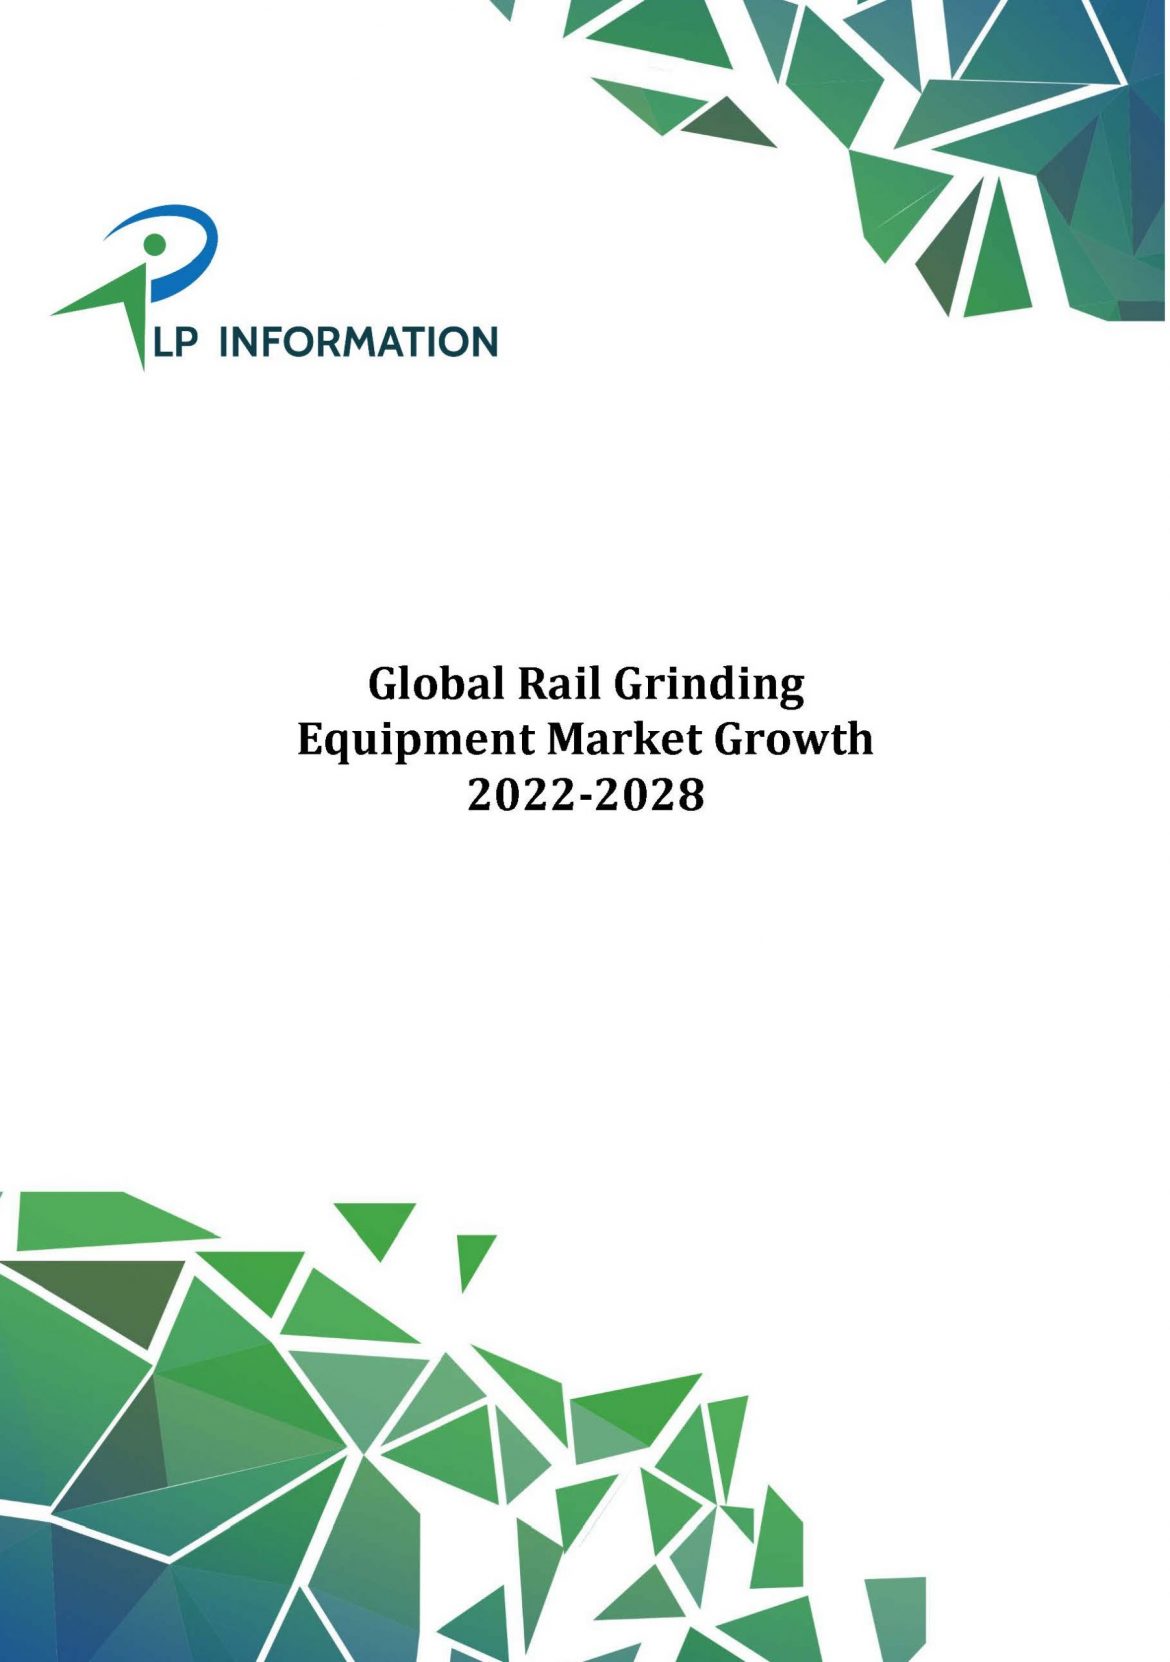 Global Rail Grinding Equipment Market Growth 2022-2028